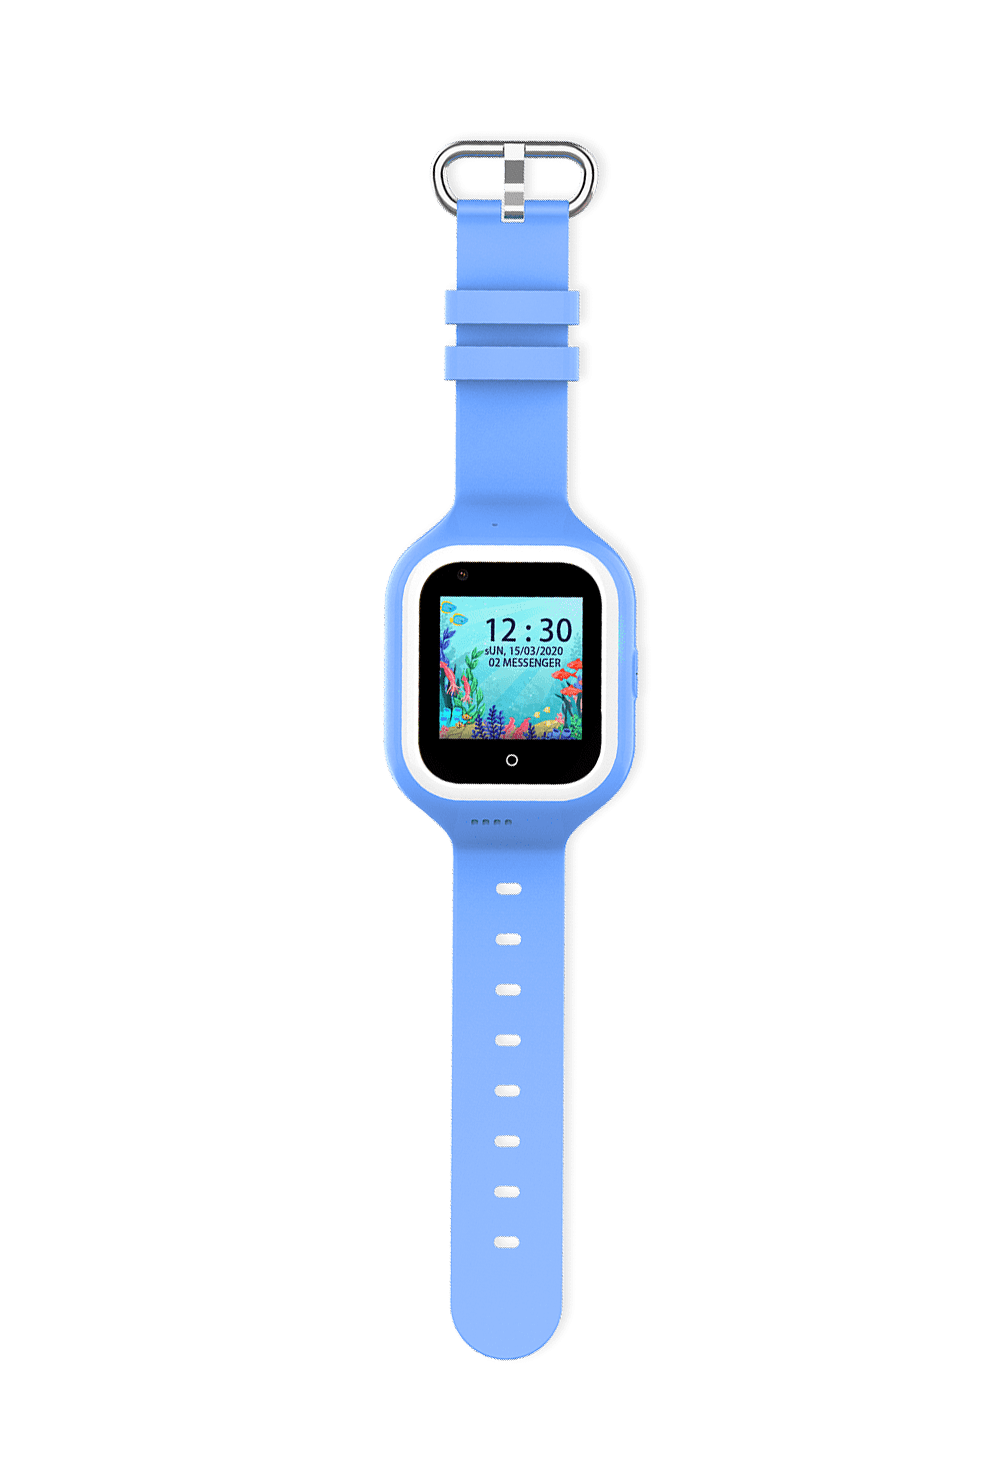 SaveFamily GPS 4G ICONIC+ Reloj para niños (Color Azul), Envío 48/72 horas